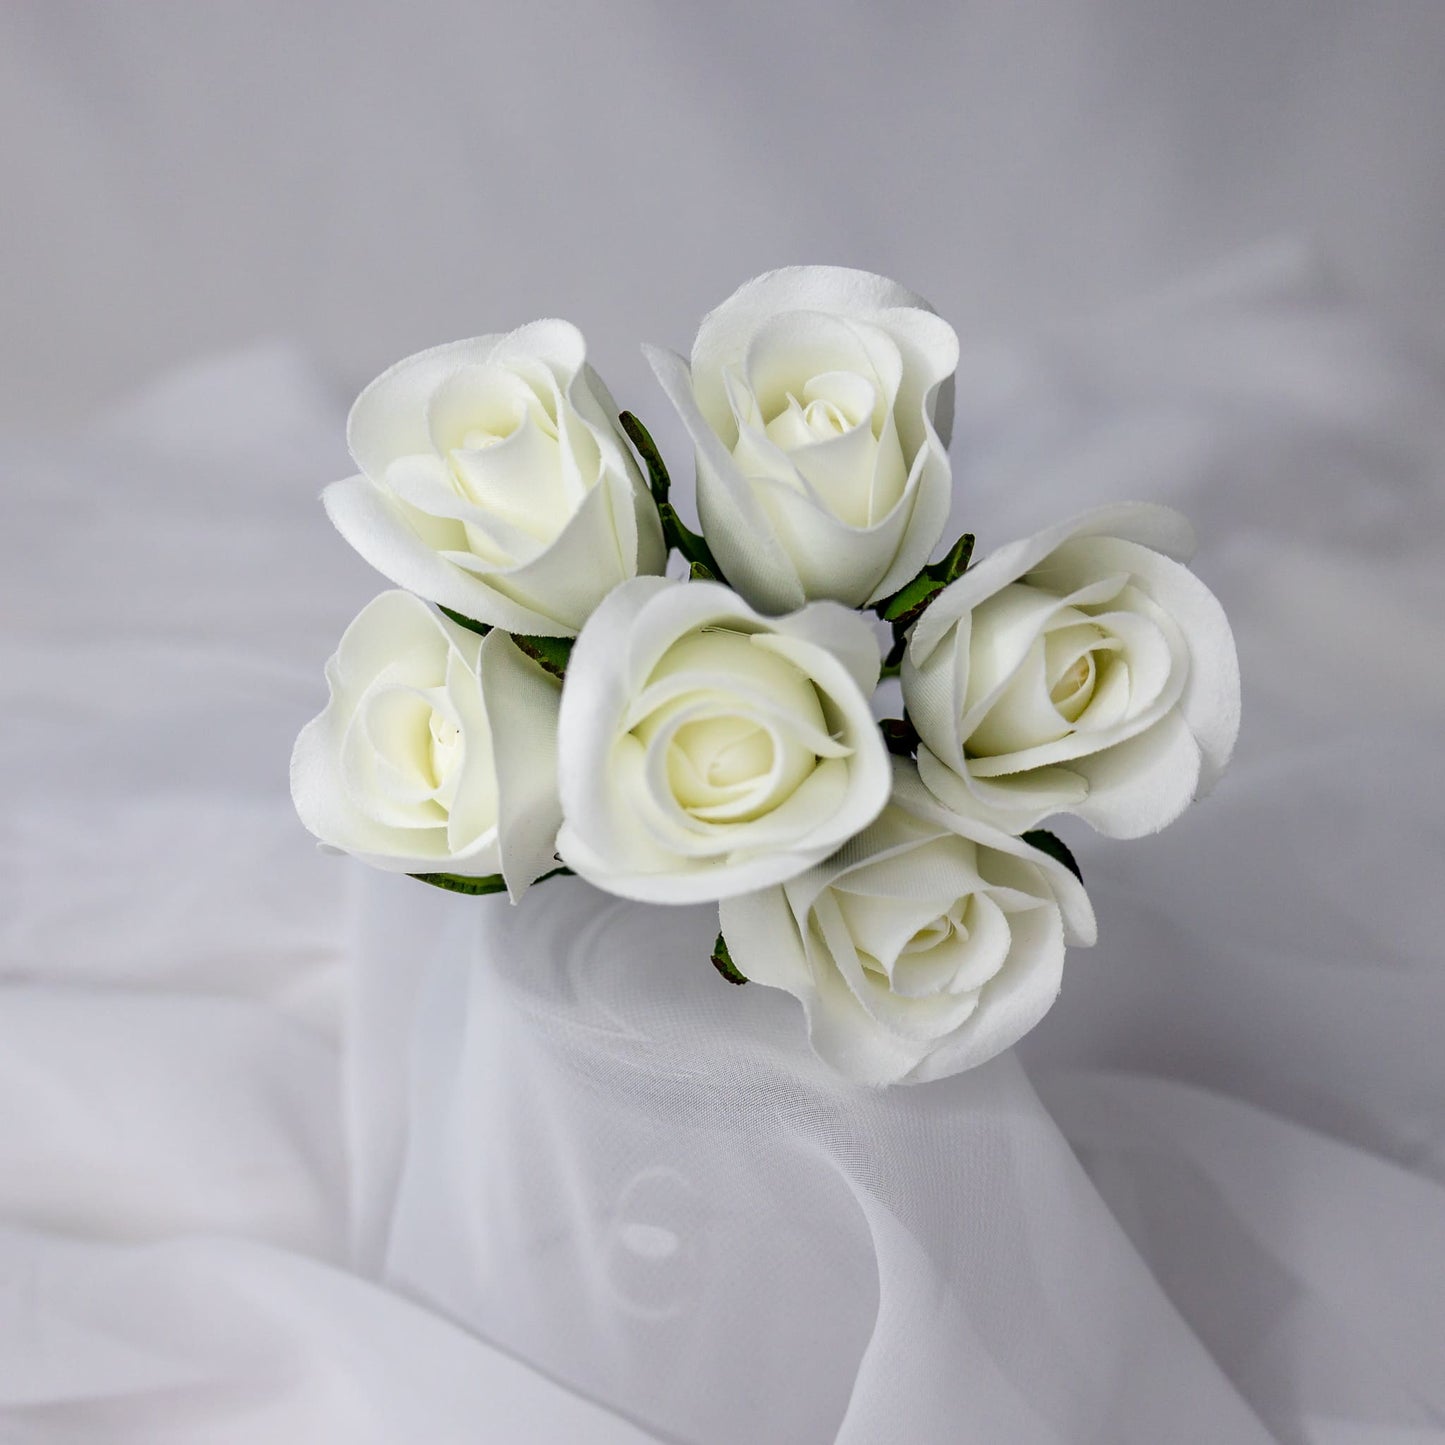 artificial white velveeten rose buds top view